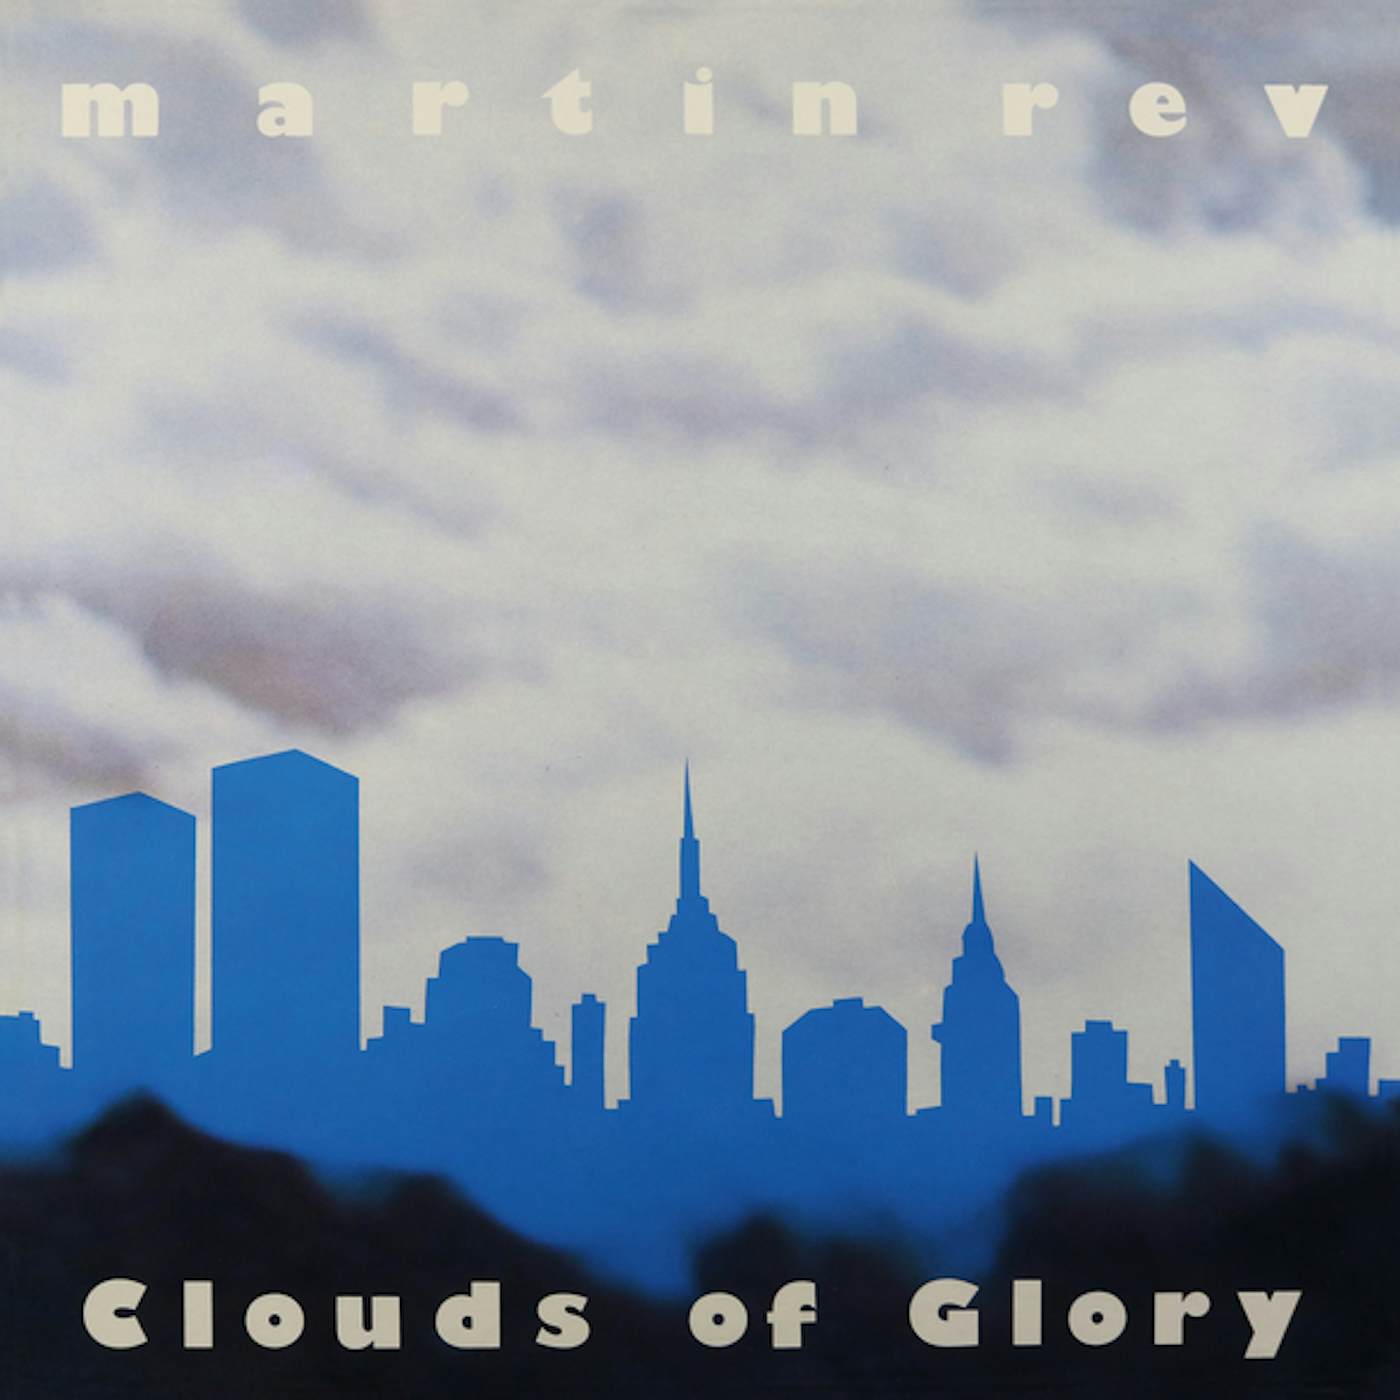 Martin Rev Clouds Of Glory Vinyl Record